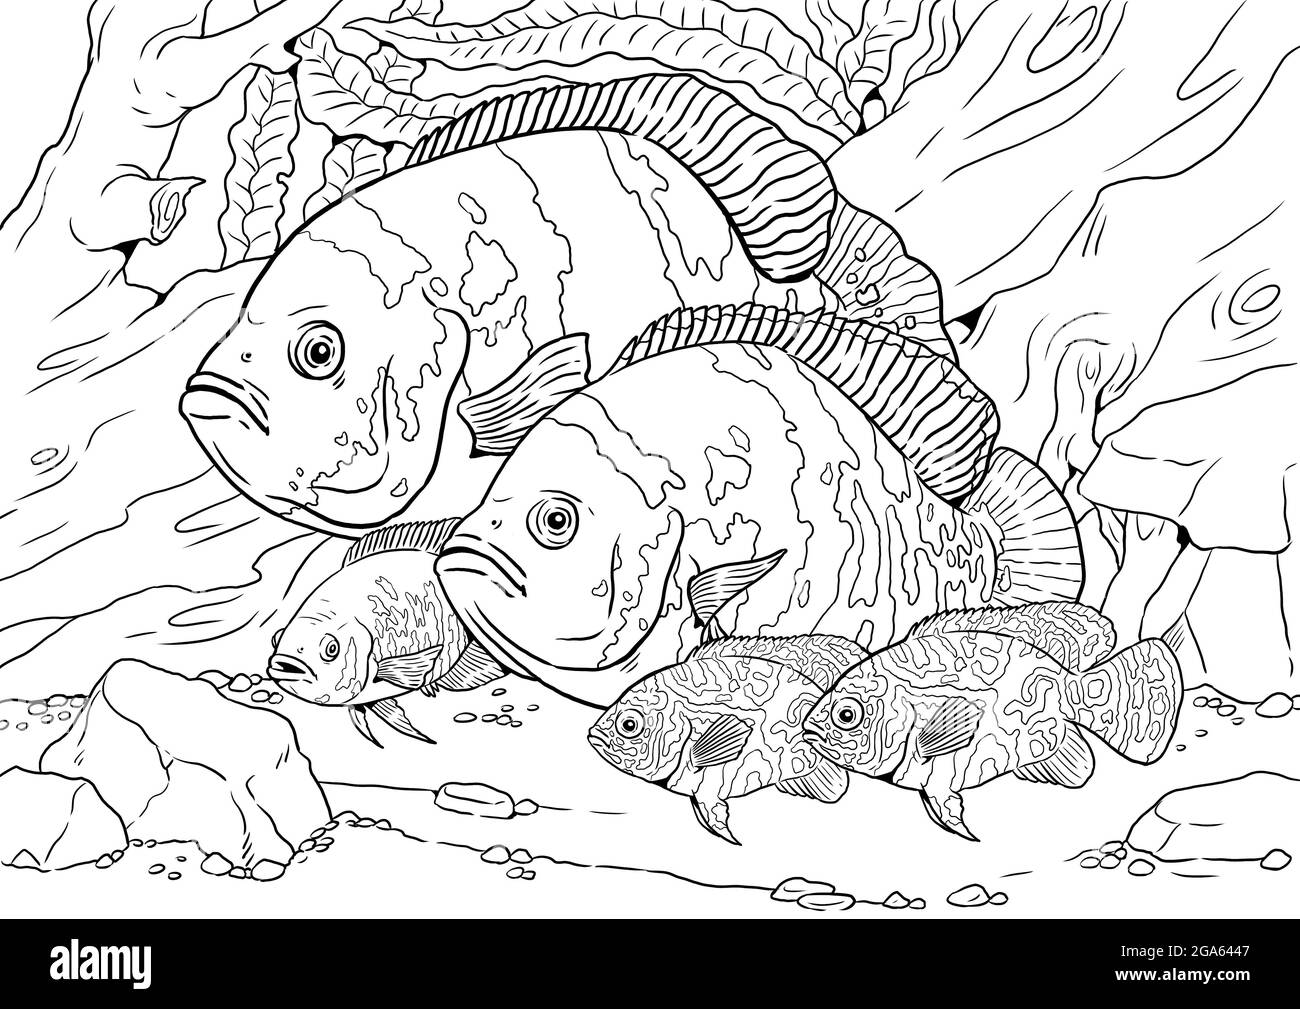 Aquarium with big cichlid oscar for coloring. Colorful fish with offspring. Drawing for coloring book. Stock Photo